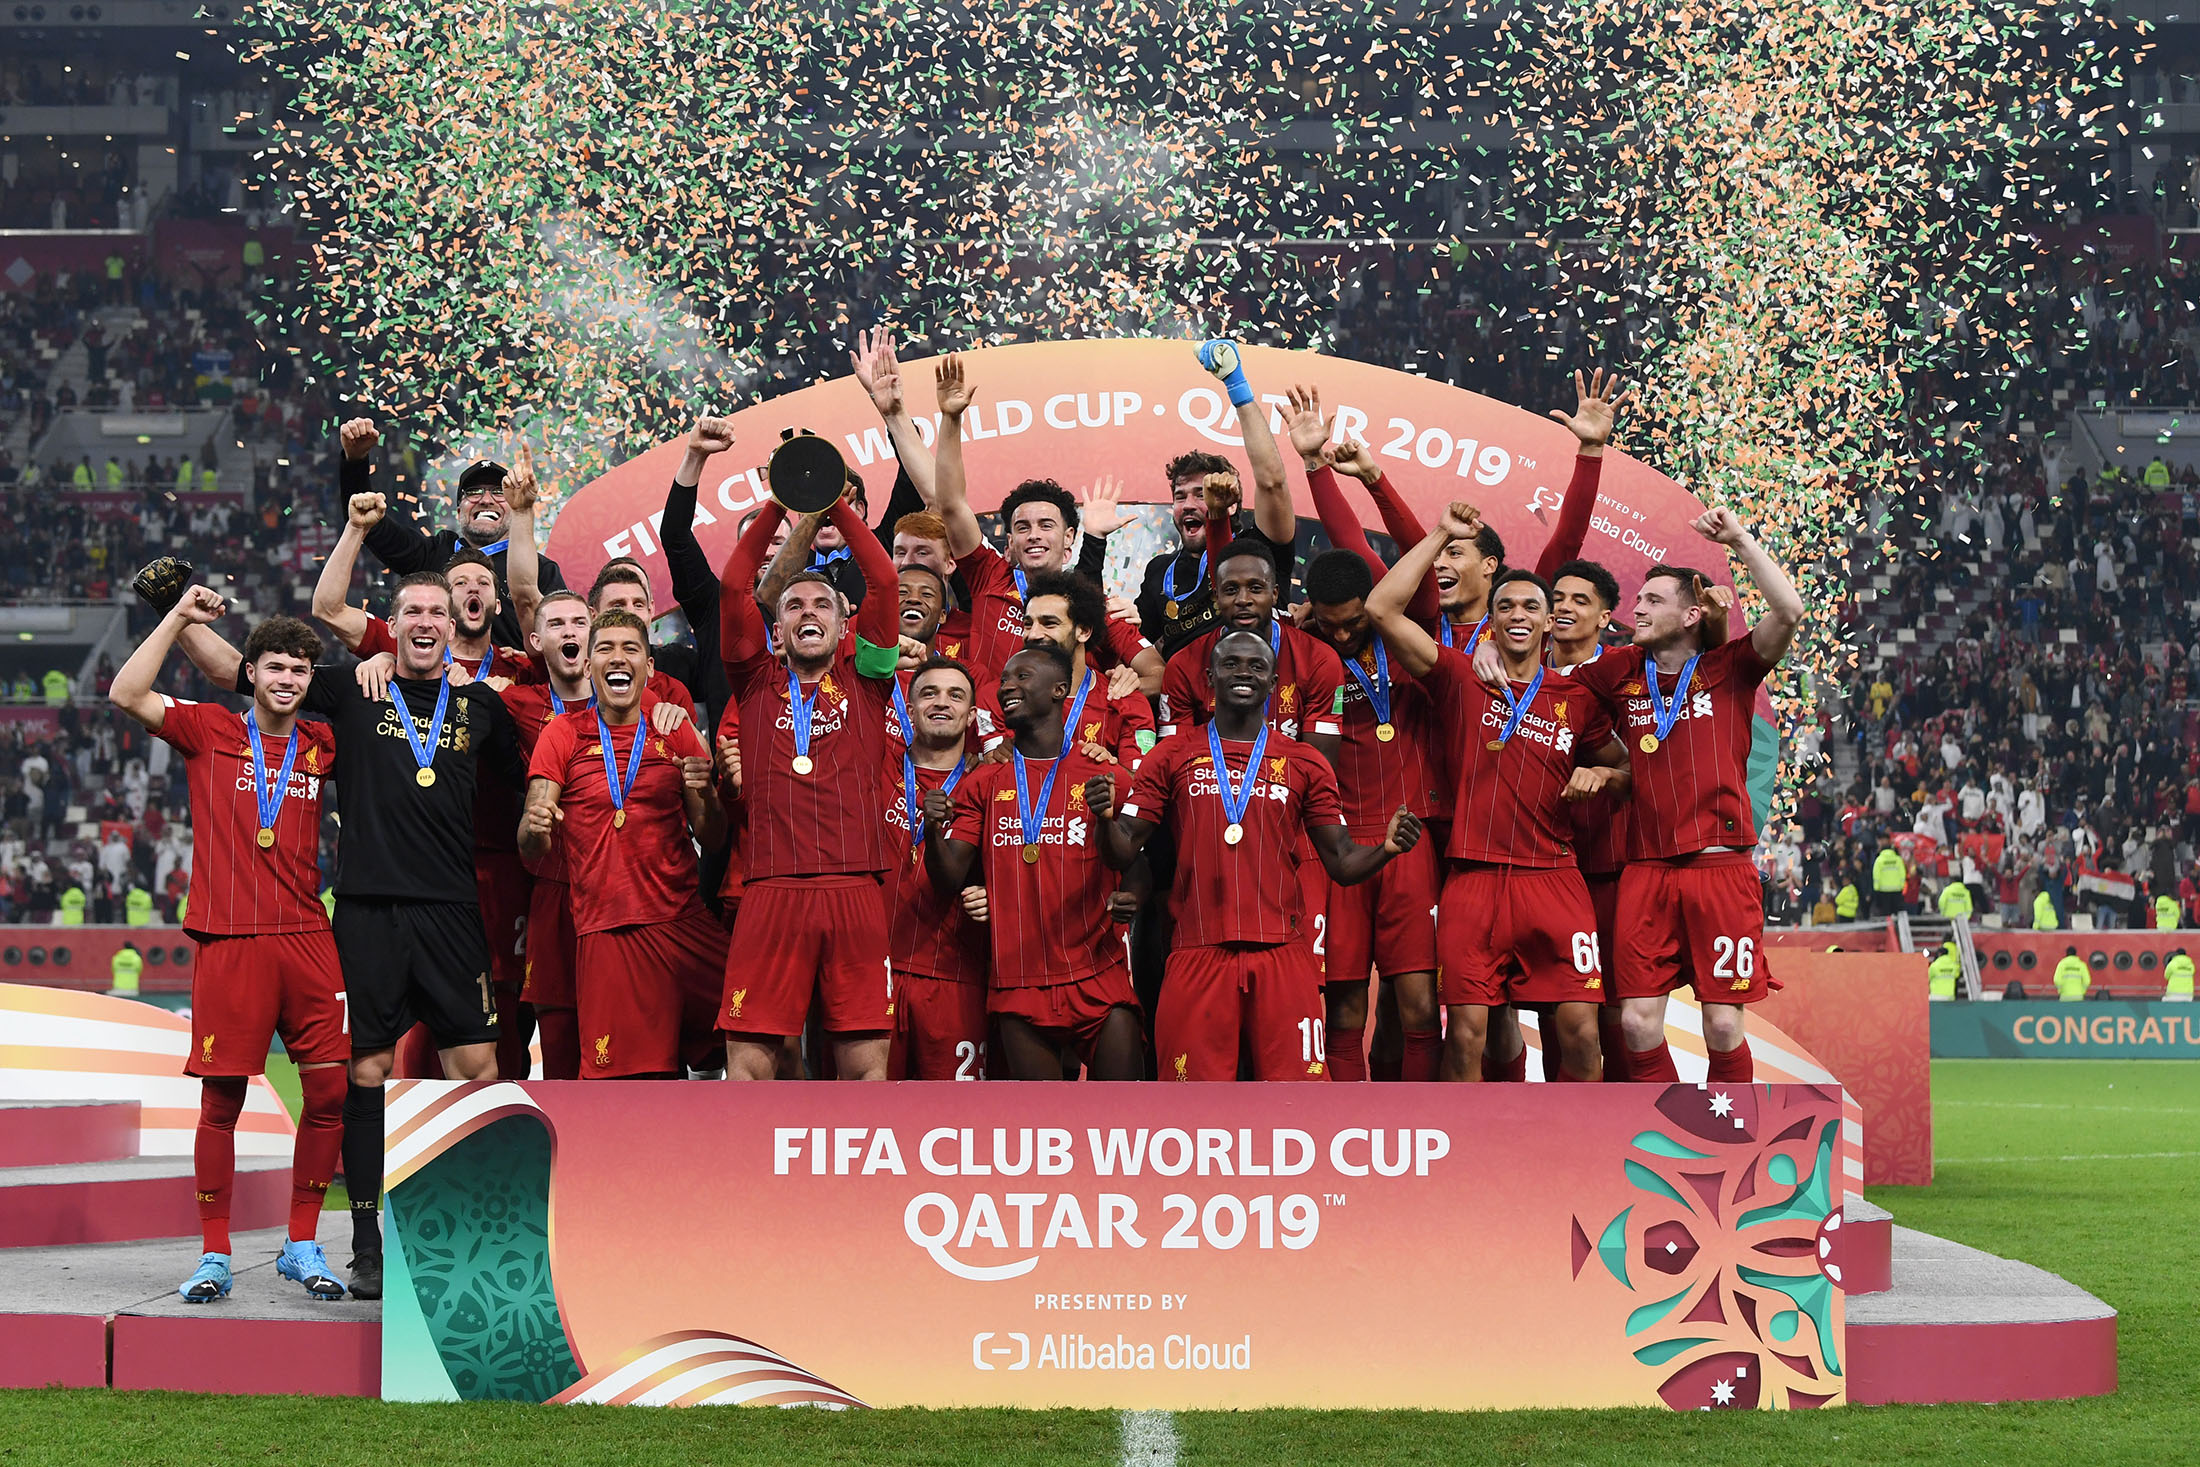 Liverpool Lands 1st World Title, Qatar Passes Pre-2022 Test